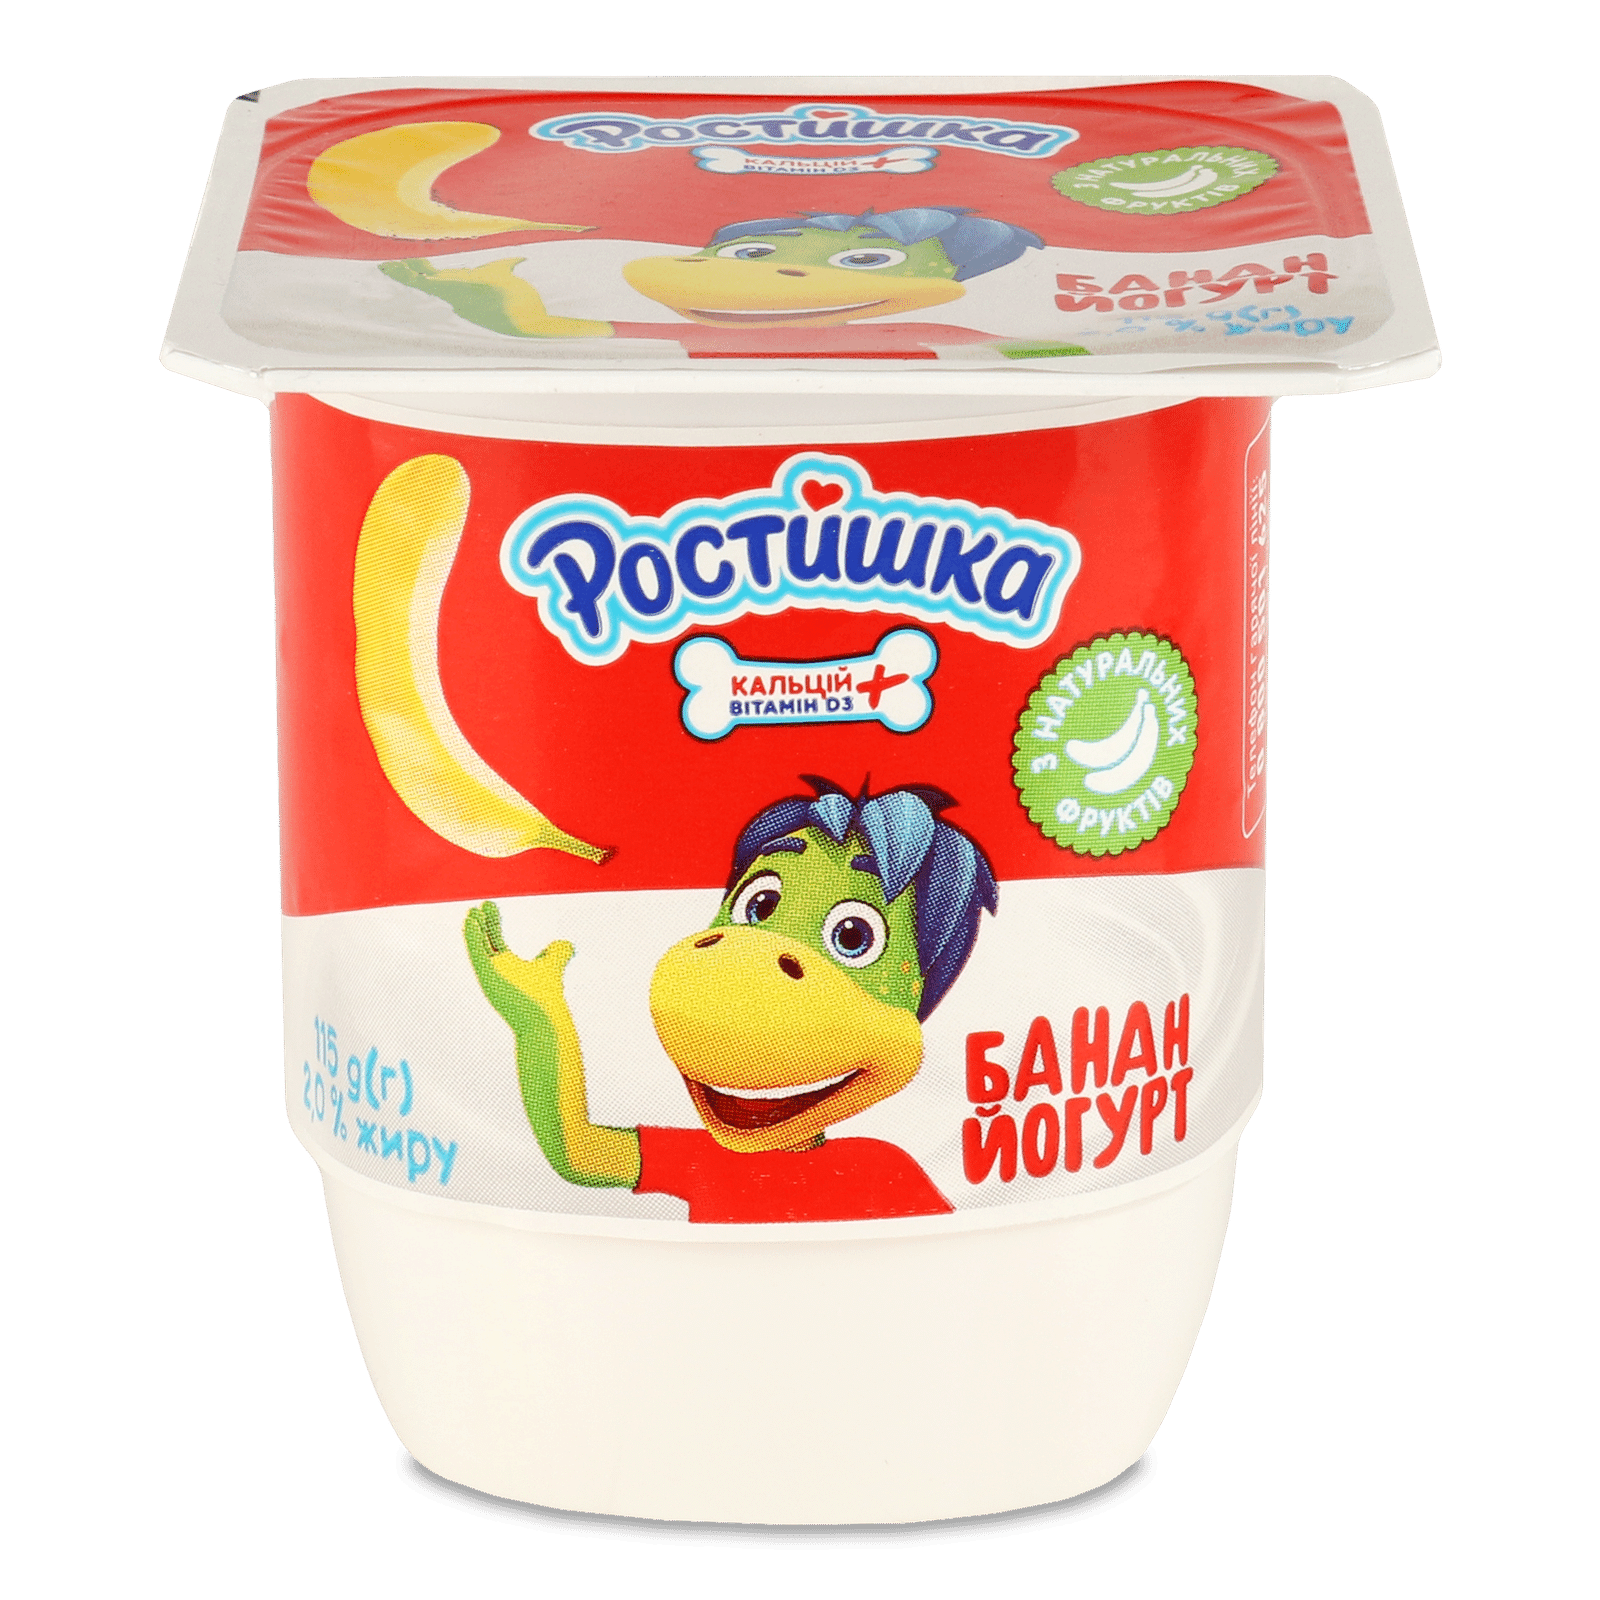 Йогурт Ростишка банан 2% стакан - 1